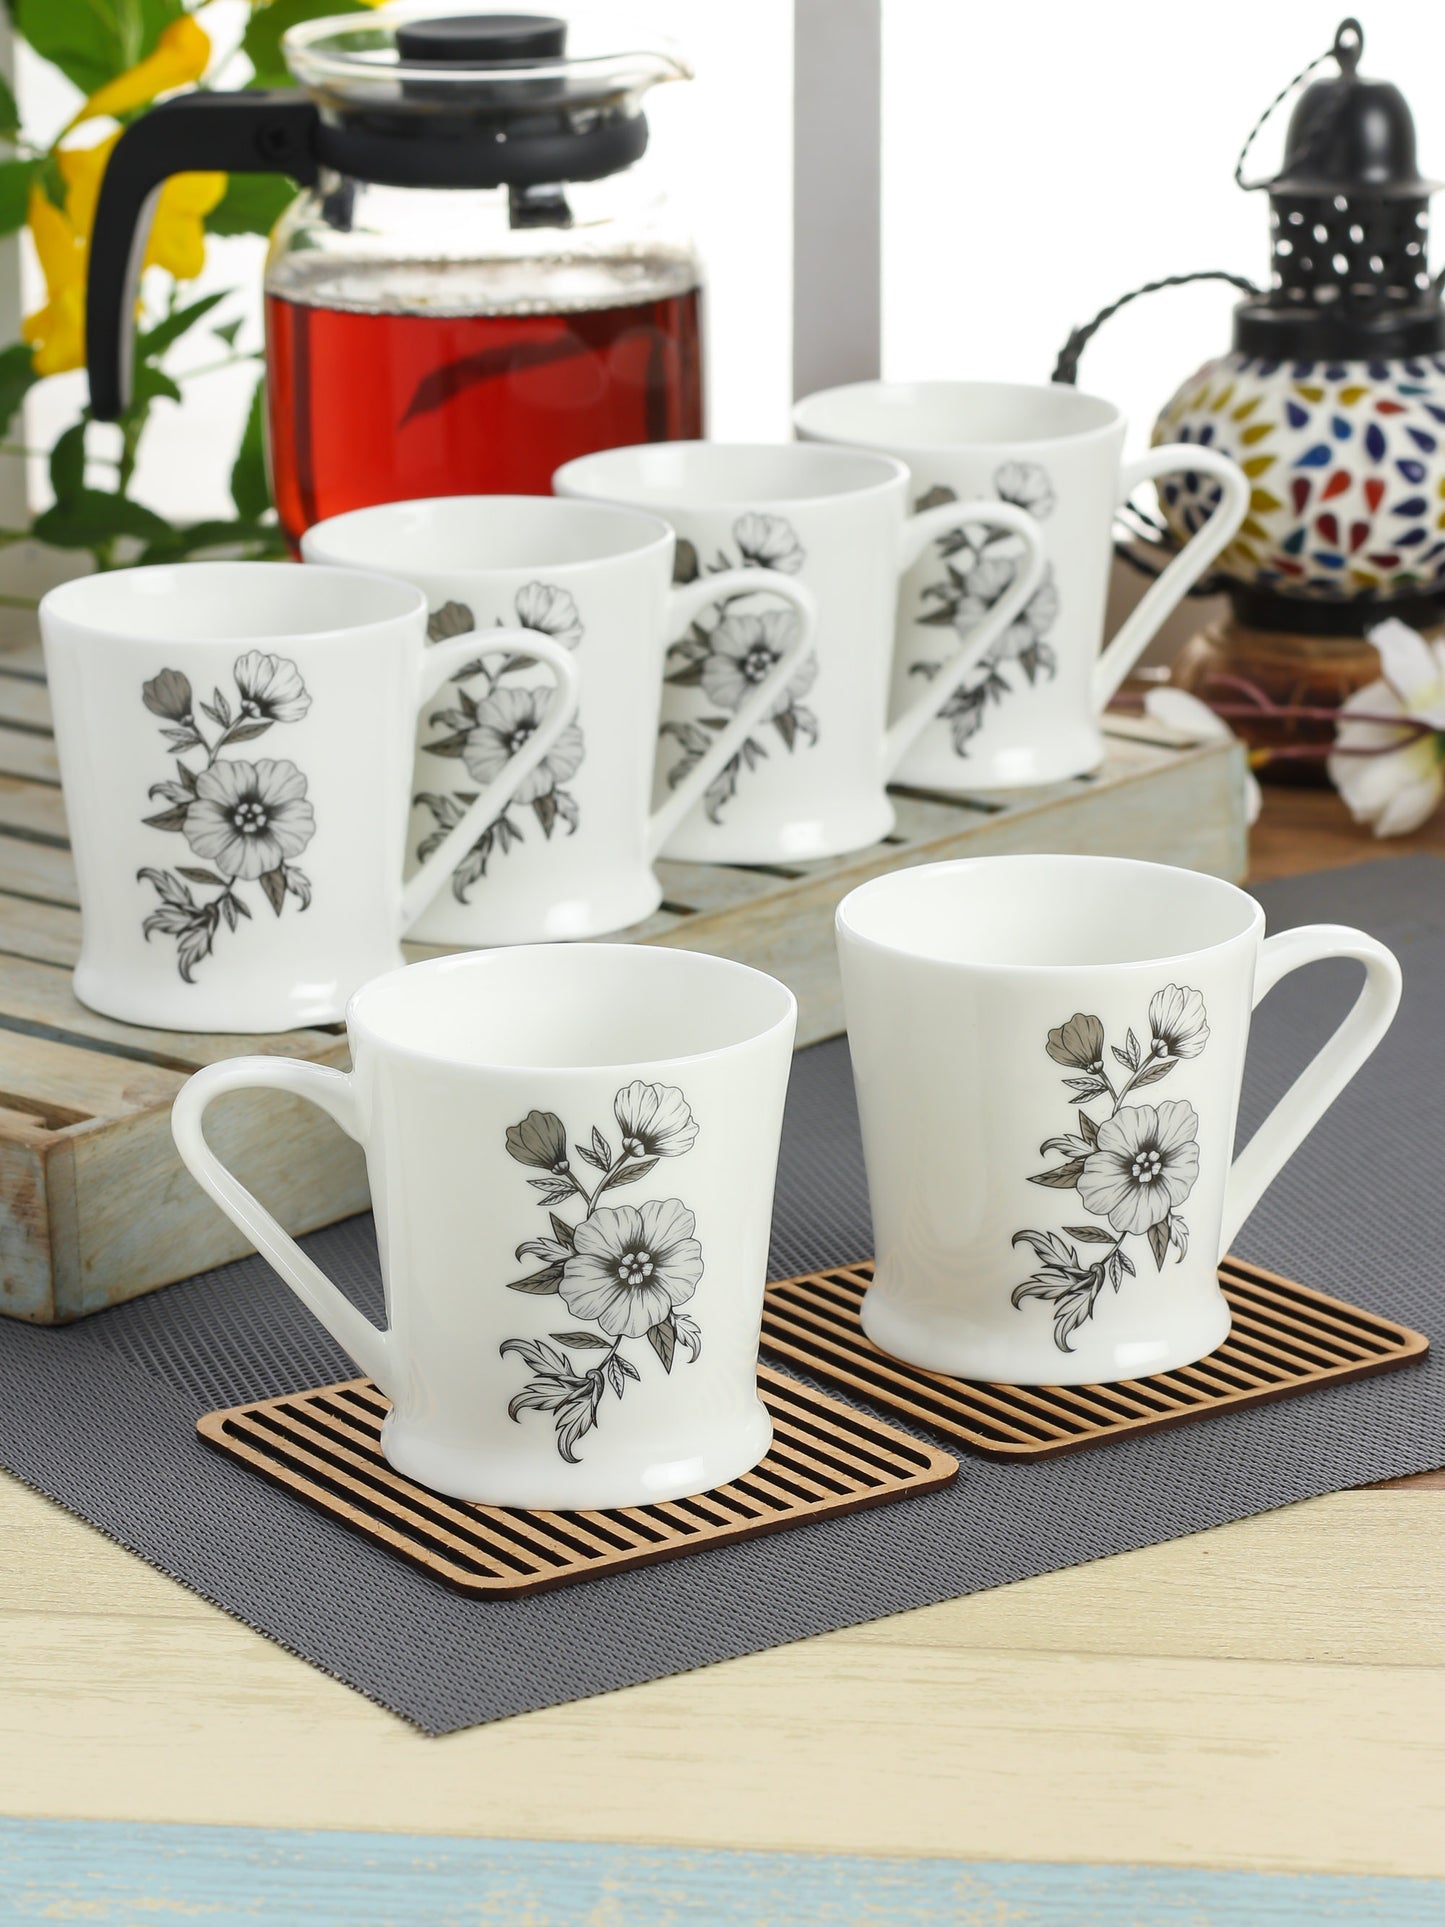 Peter Small Microwave Coffee & Tea Mugs, 150ml, Set of 6 (MW25) - Clay Craft India